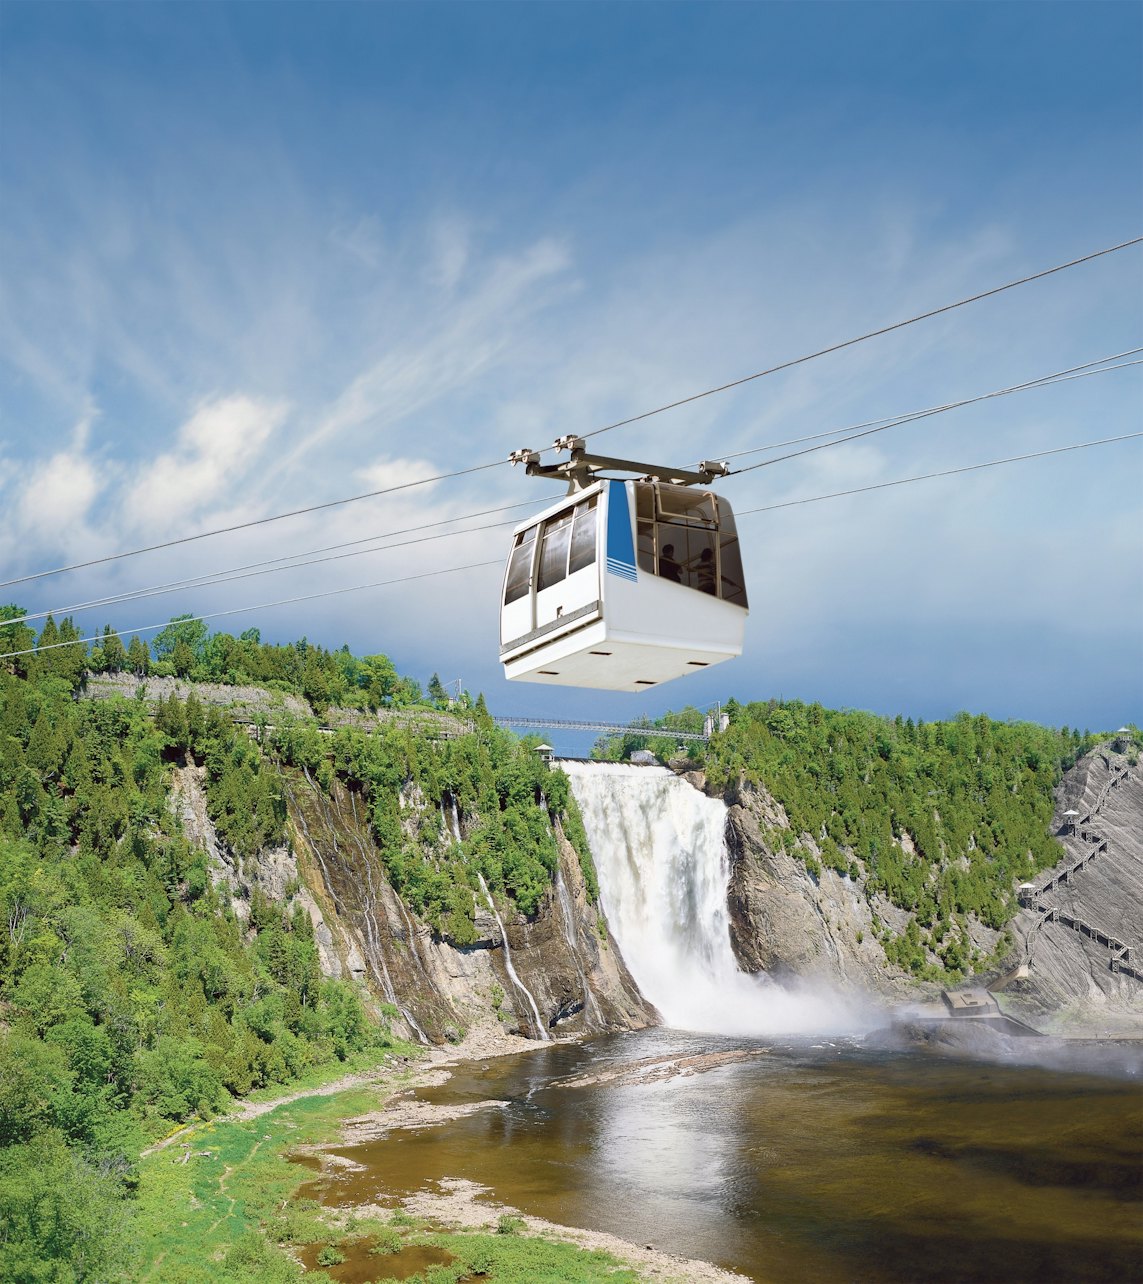 Parc de la Chute-Montmorency: Falls Admission & Roundtrip Cable Car Access - Accommodations in Quebec City